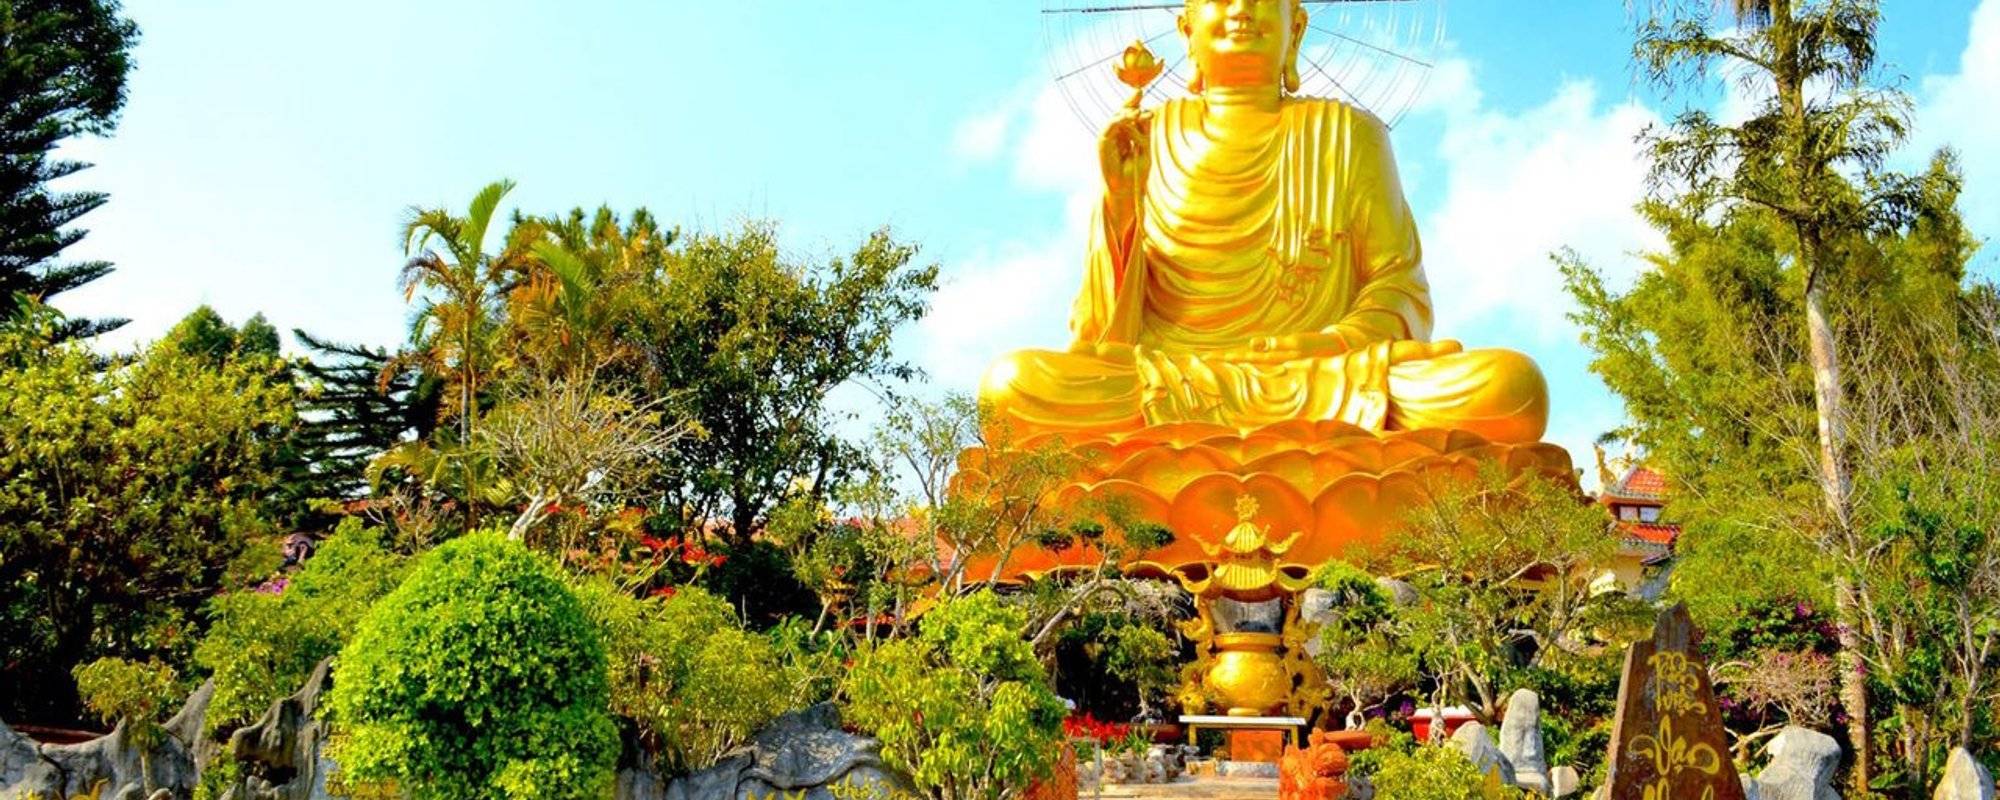 8 Stories of Gleaming Gold – The Biggest Buddha in Dalat Vietnam